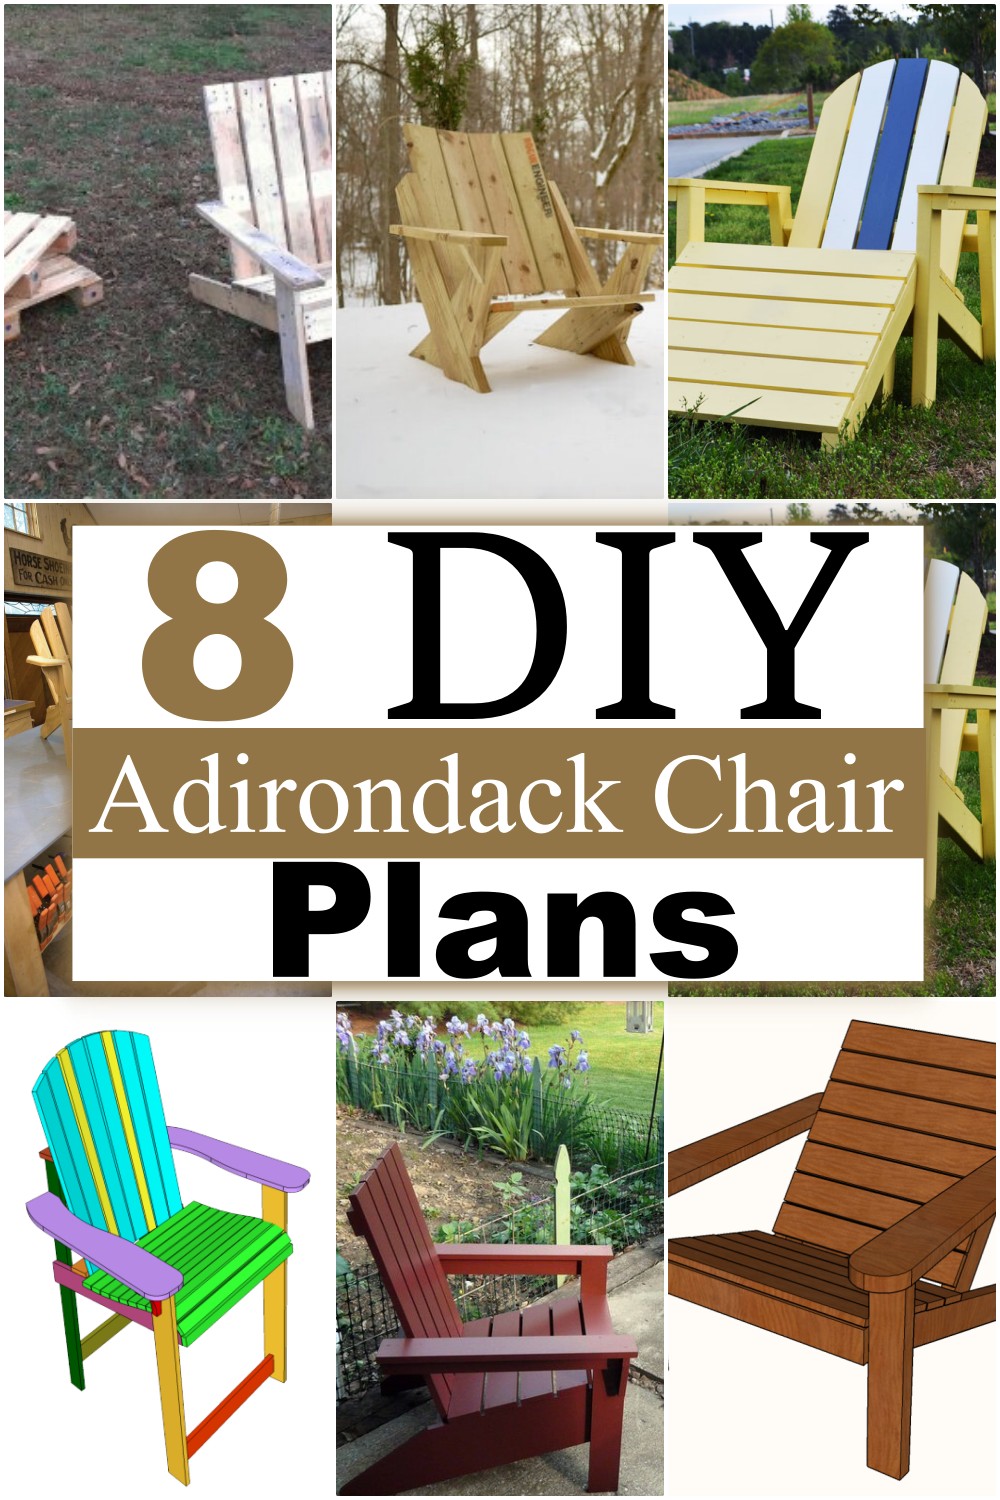 8 DIY Adirondack Chair Plans